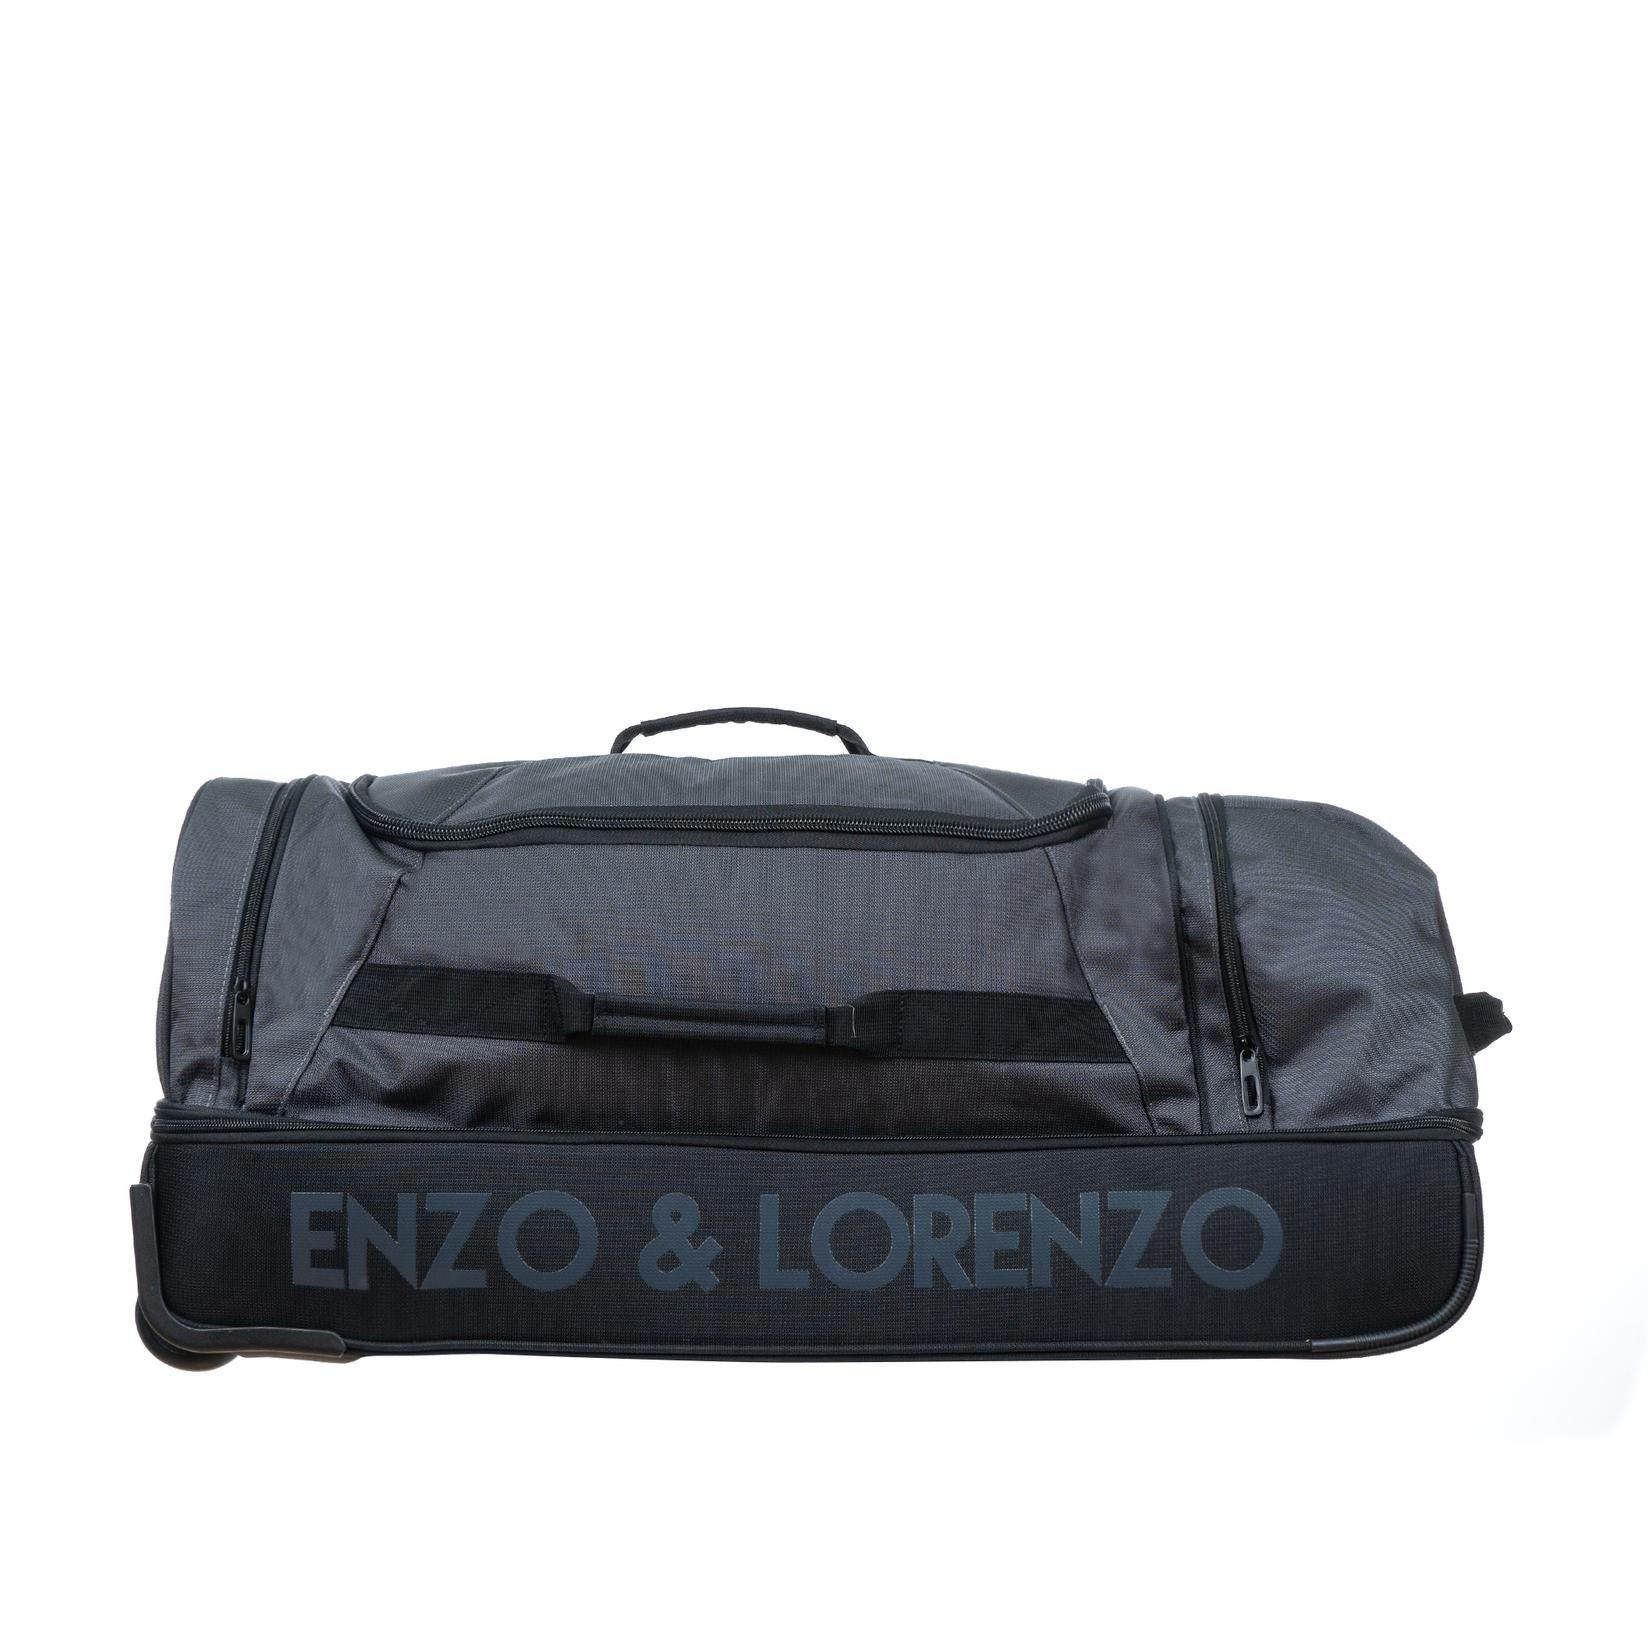 Enzo & Lorenzo Putna torba N78270, 73x35x37cm, Siva